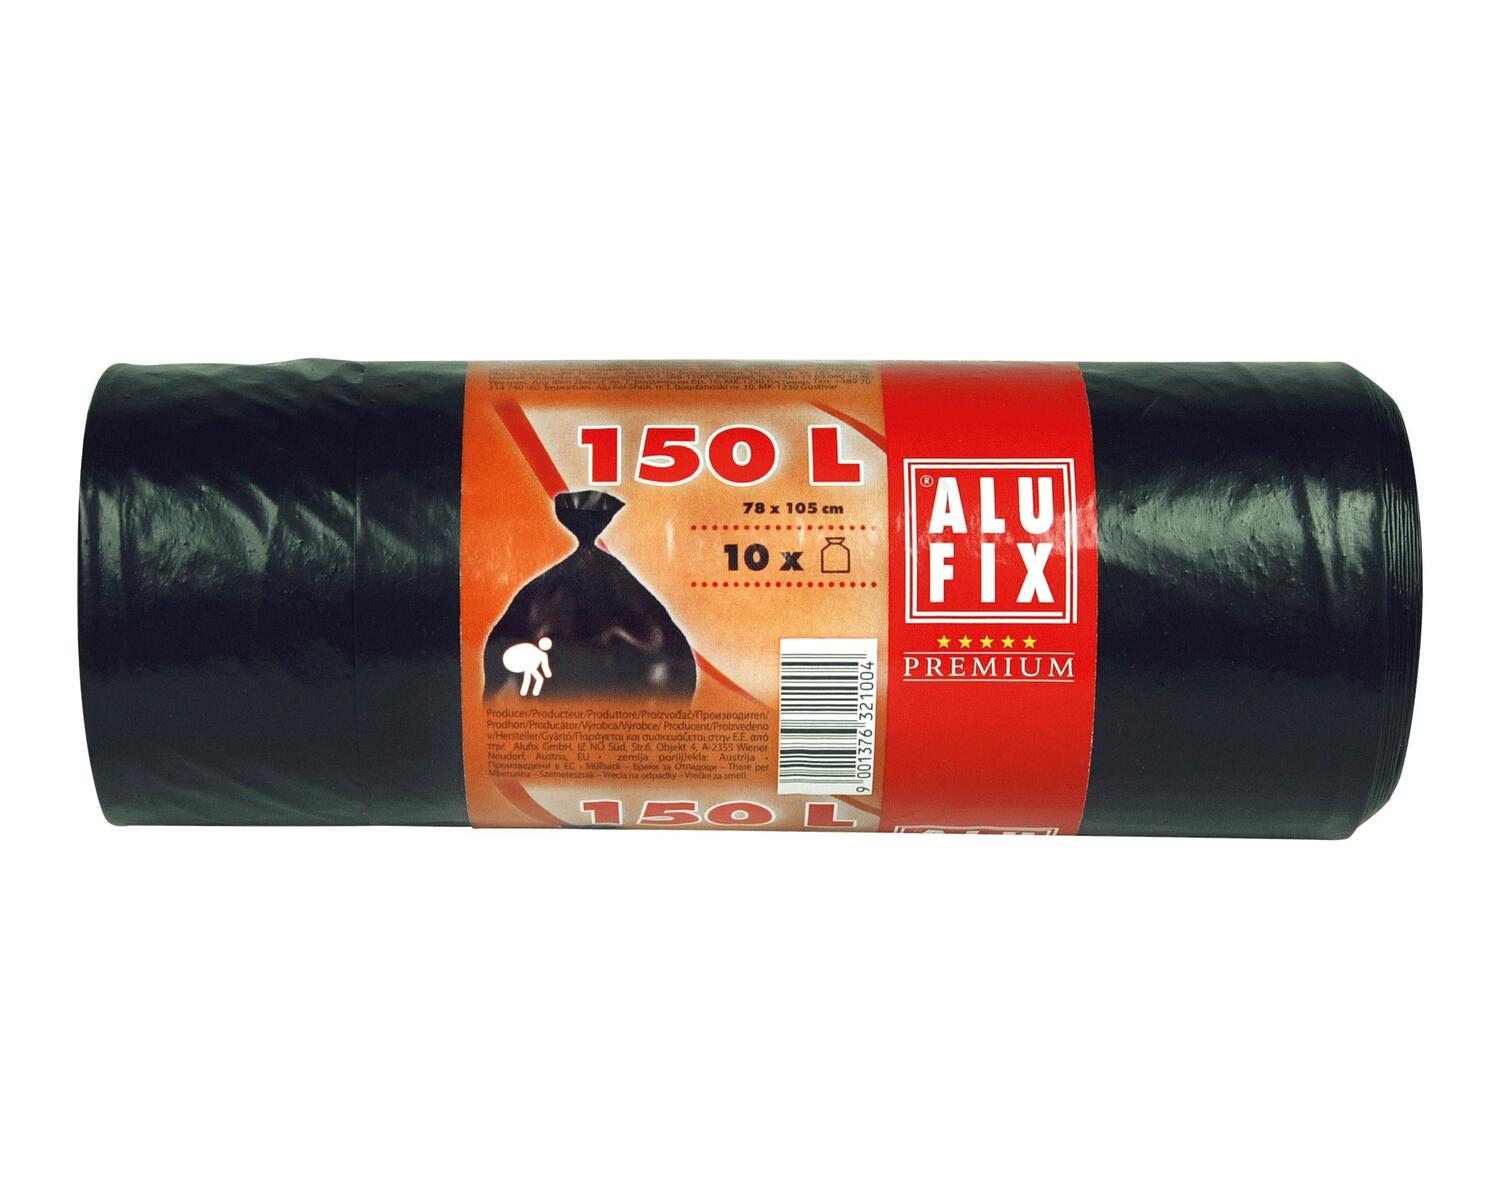 ALUFIX Mllscke Premium 150 L, HDPE 78x105 cm 37my, schwarz, 10 Stk.